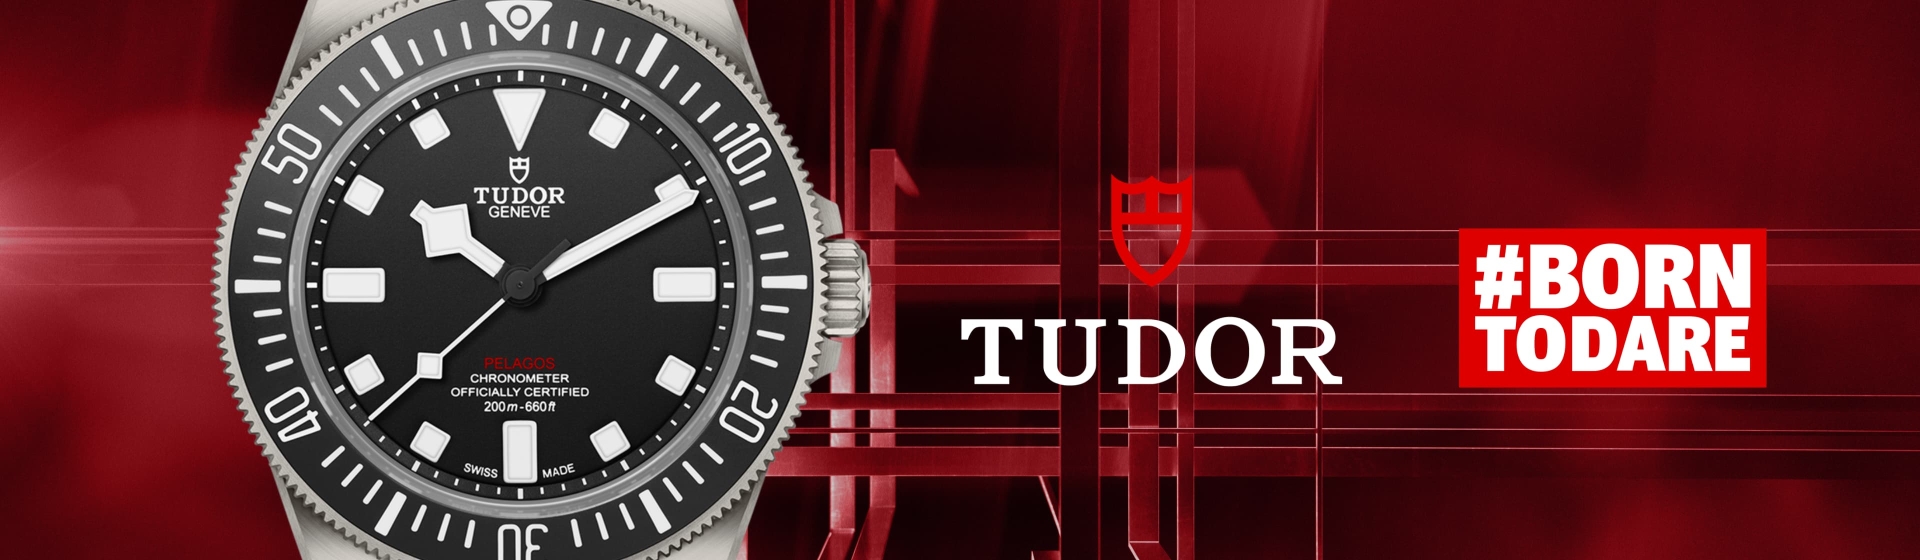 Tudor-PelagosFXD_1280x704